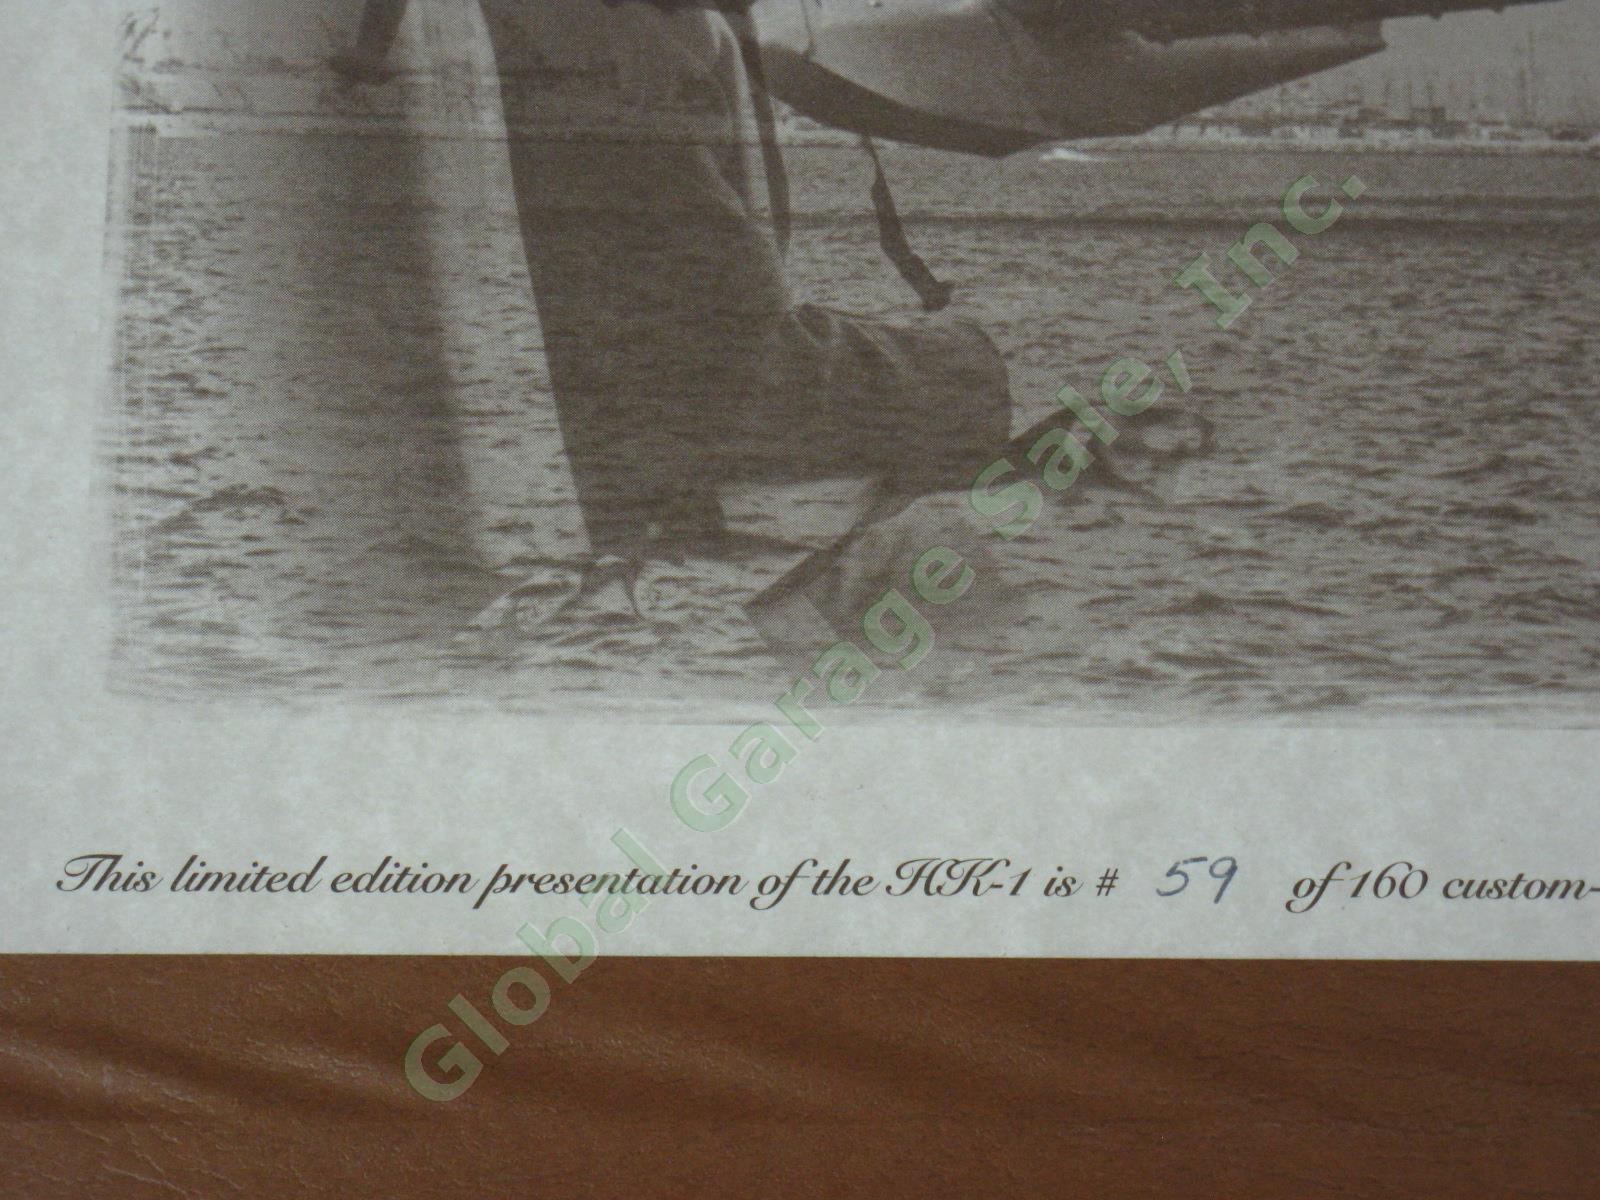 RARE Genuine Howard Hughes Spruce Goose HK-1 Artifacts Shadowbox Plaque 59/160 8